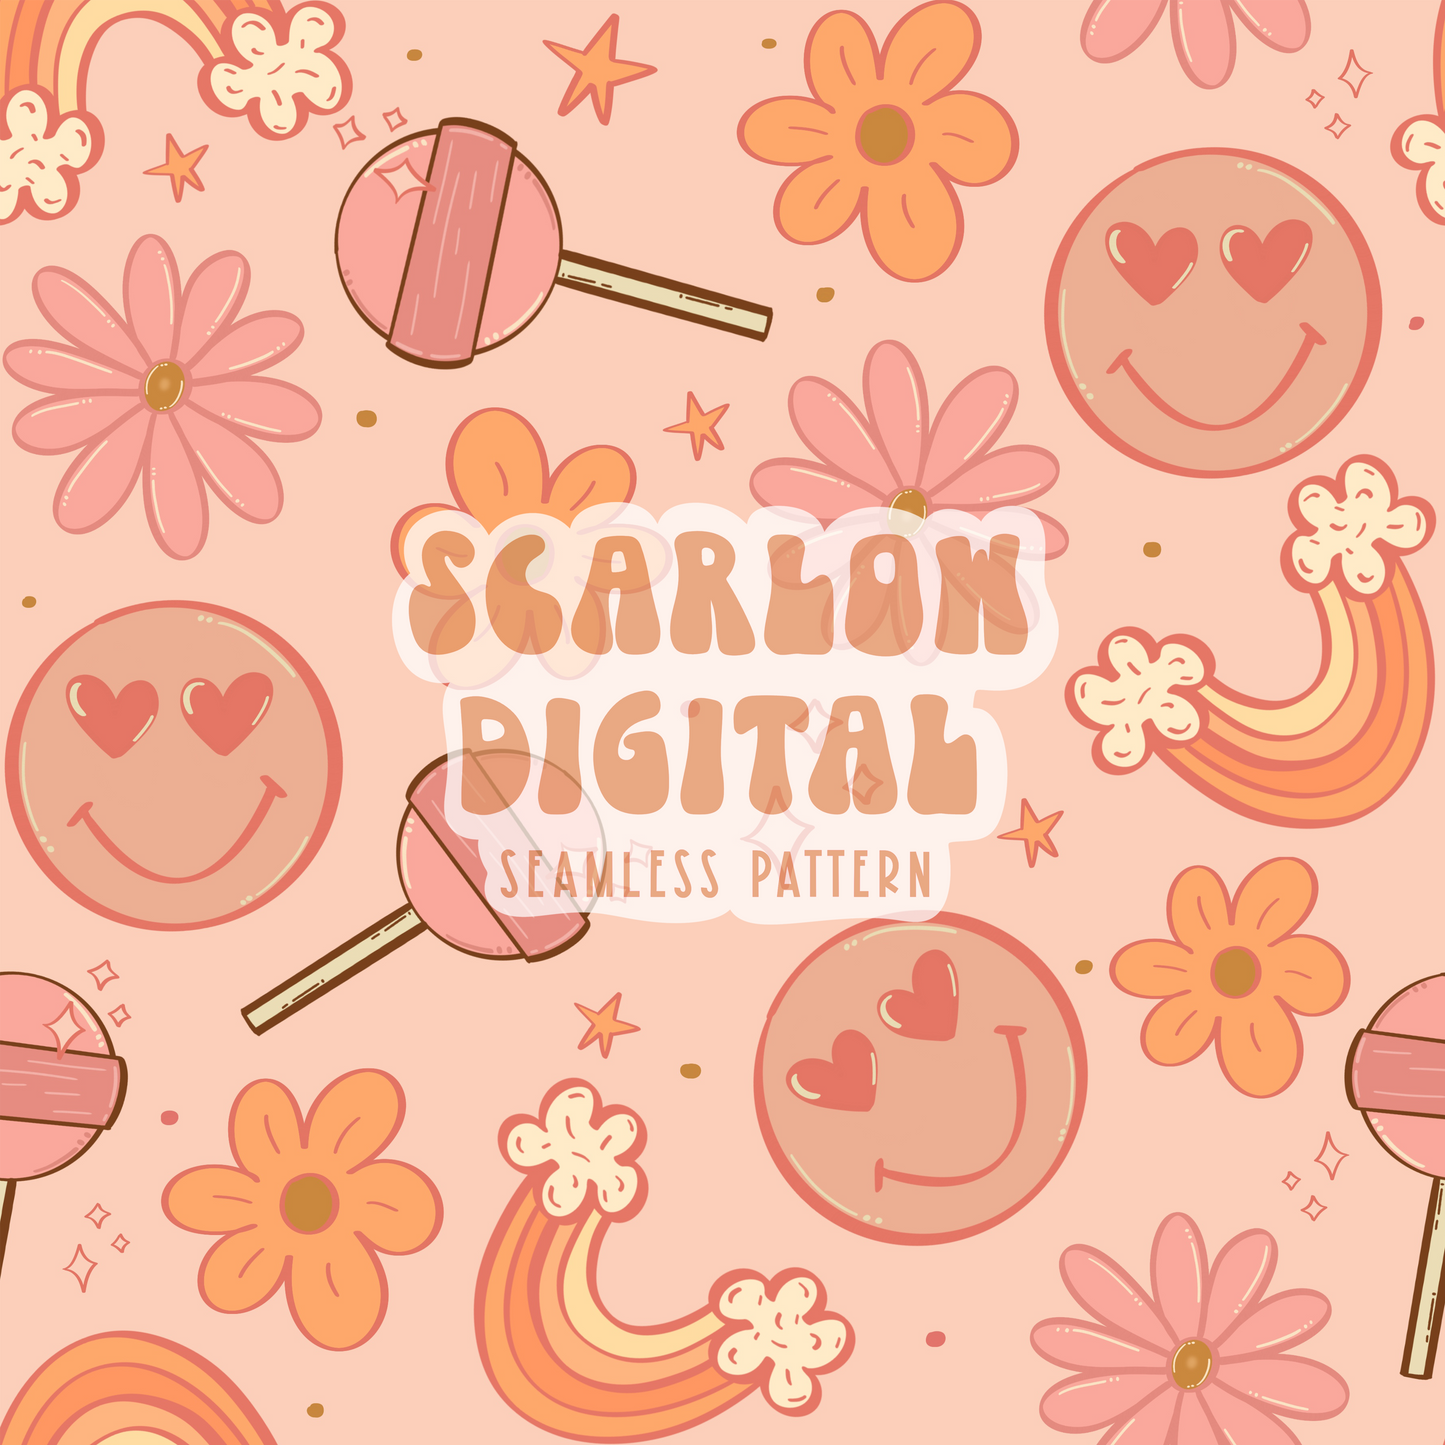 Girly Doodles Seamless Pattern-Preppy Sublimation Digital Design Download-flowers seamless pattern, summertime seamless file, spring design